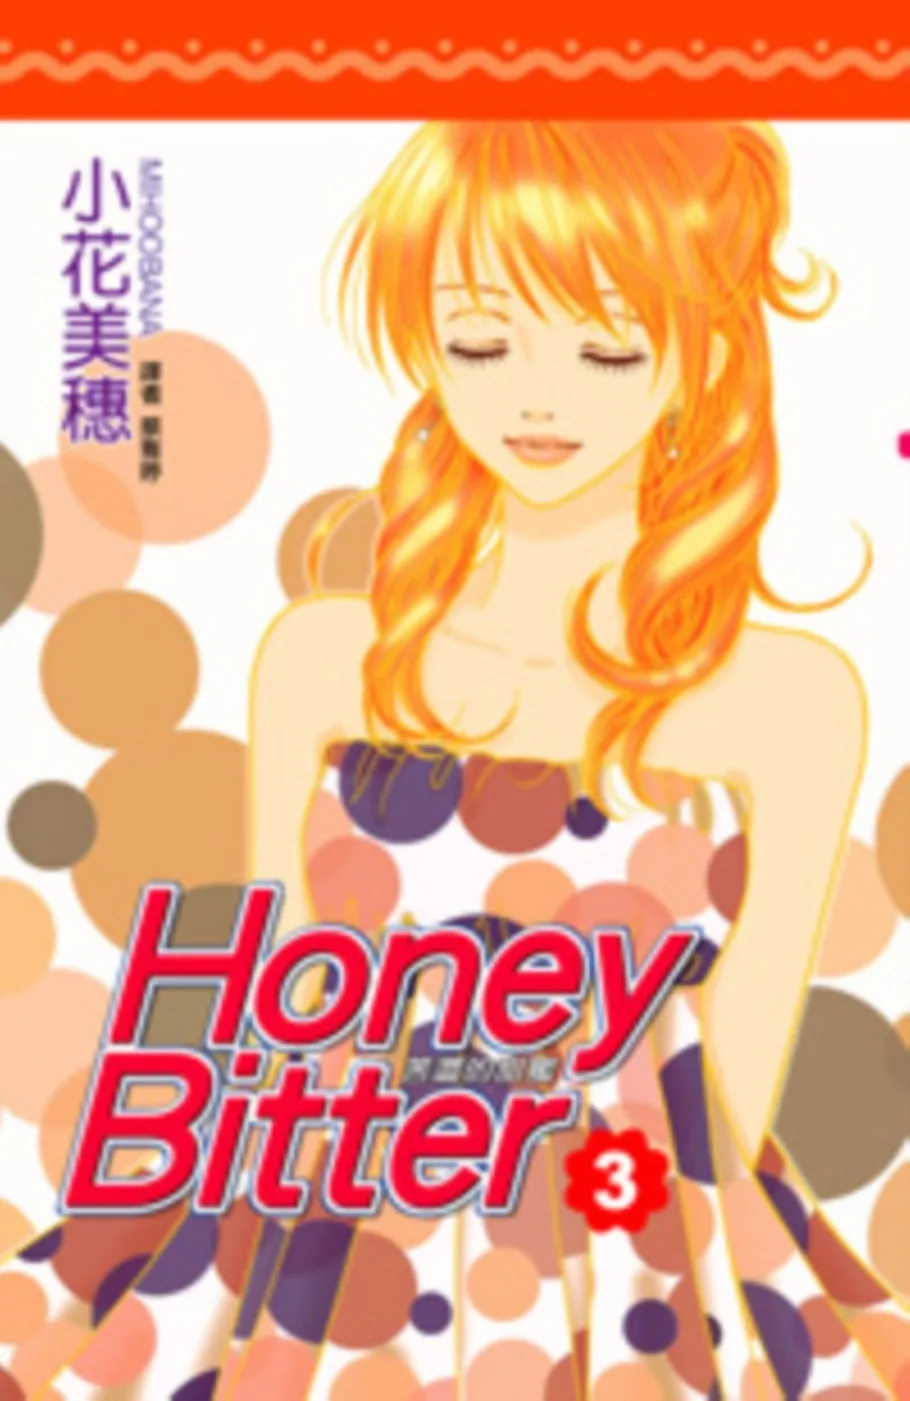 Honey Bitter苦澀的甜蜜(03)